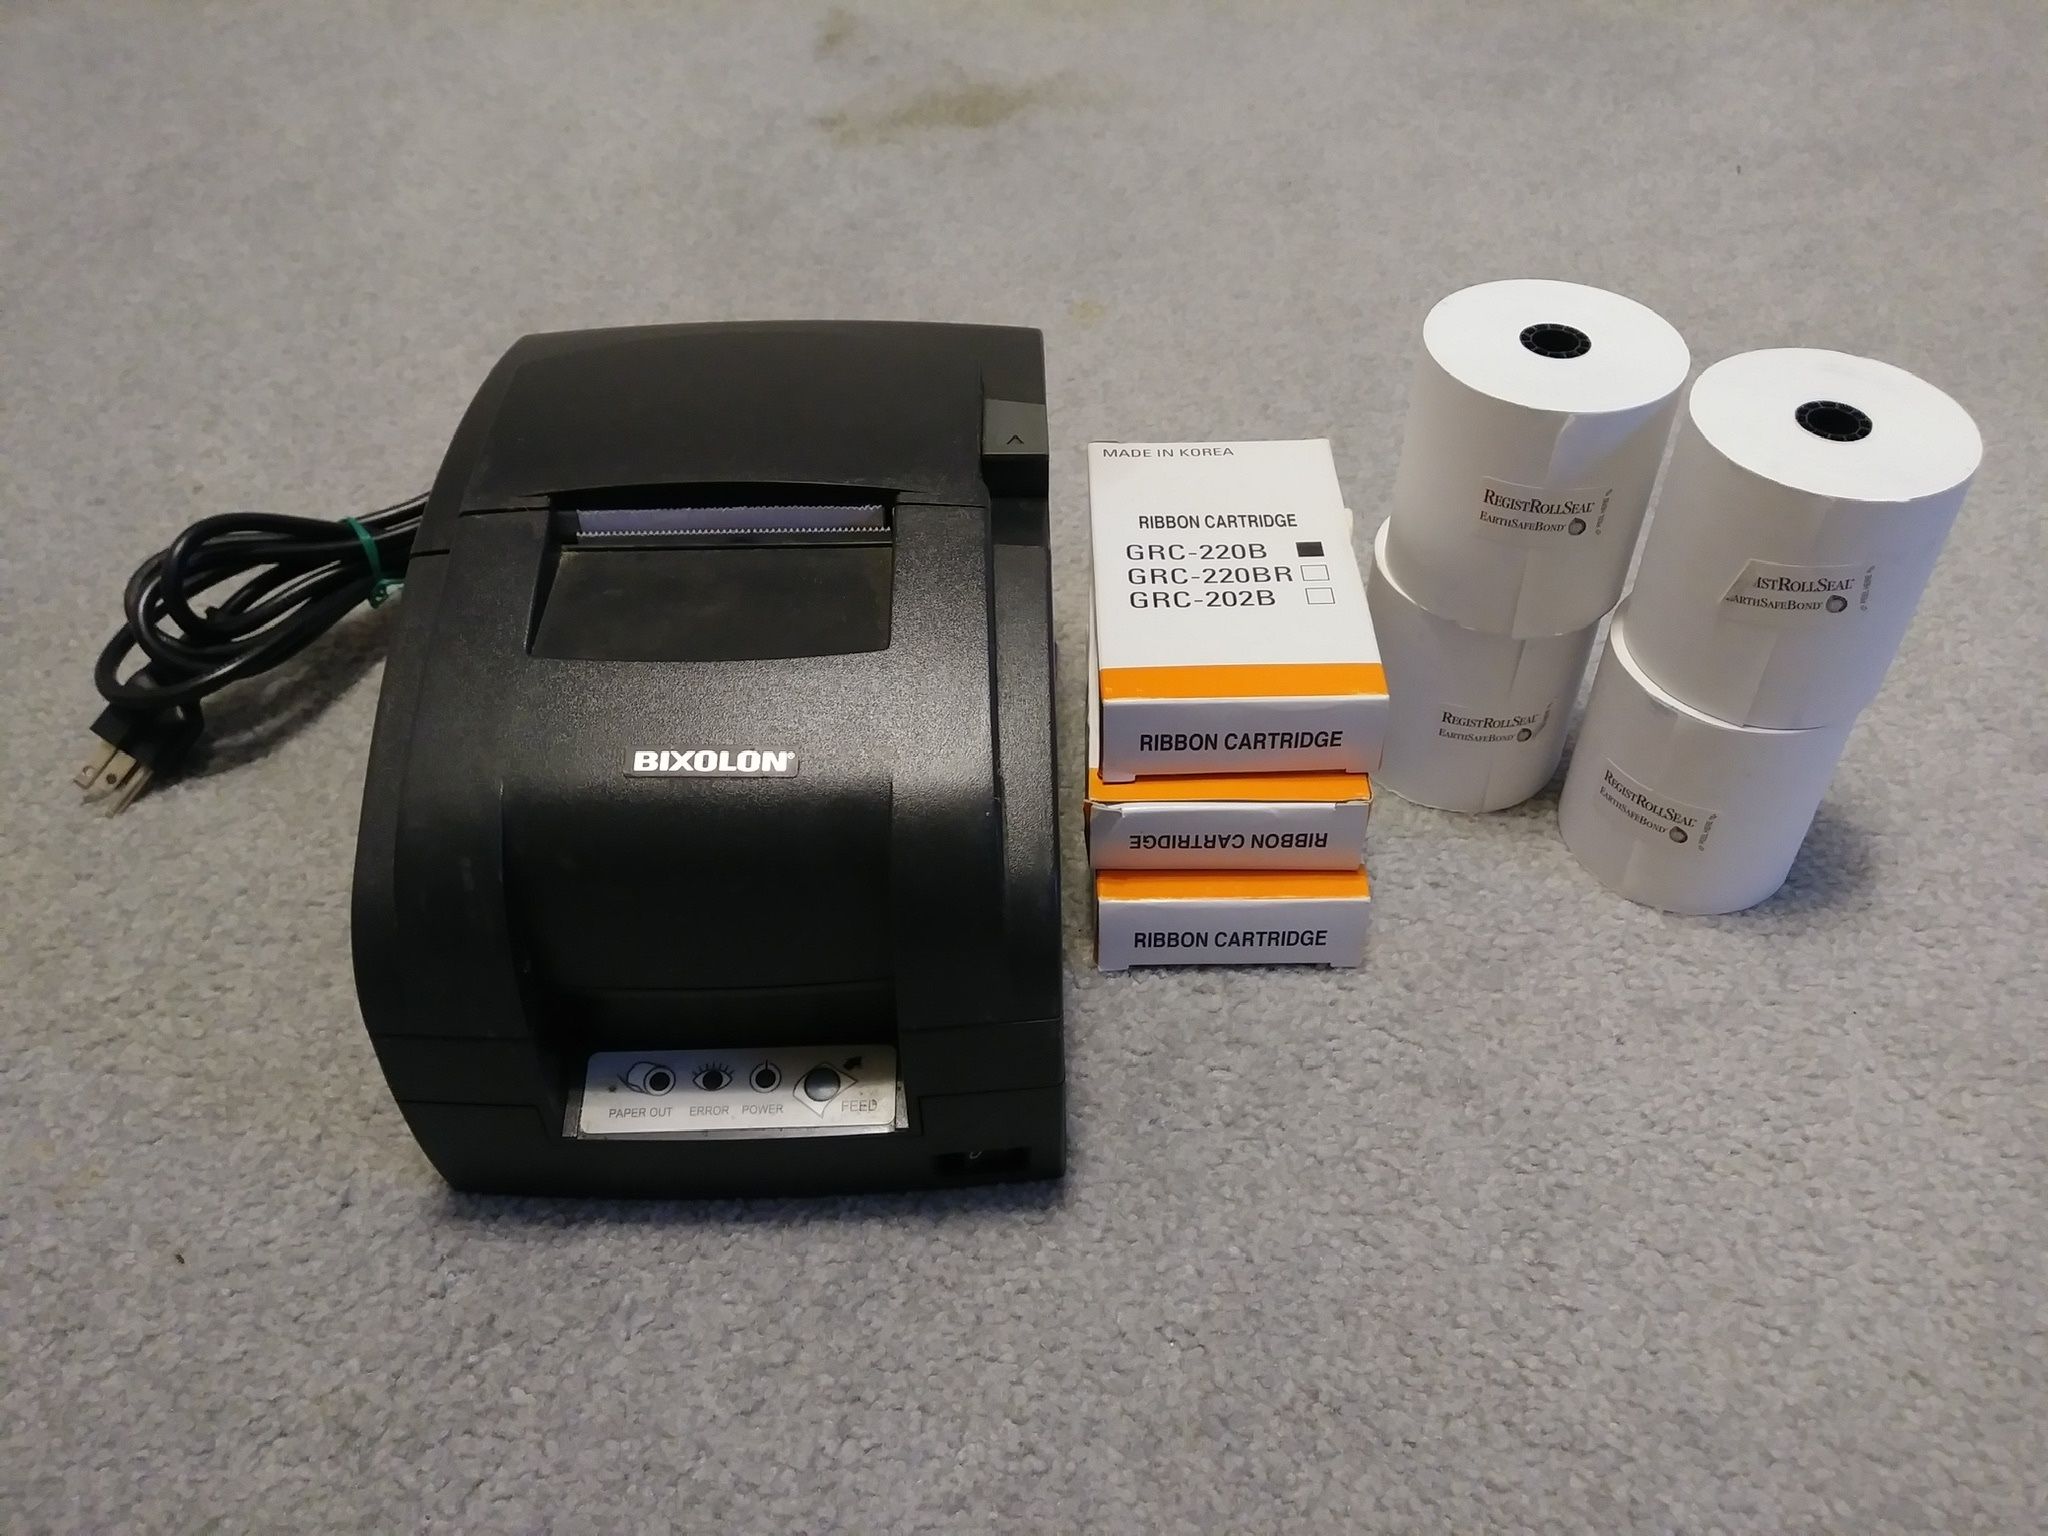 BIXILON Receipt Printer plus Three Ink Cartridge An Four Roll Of Paper